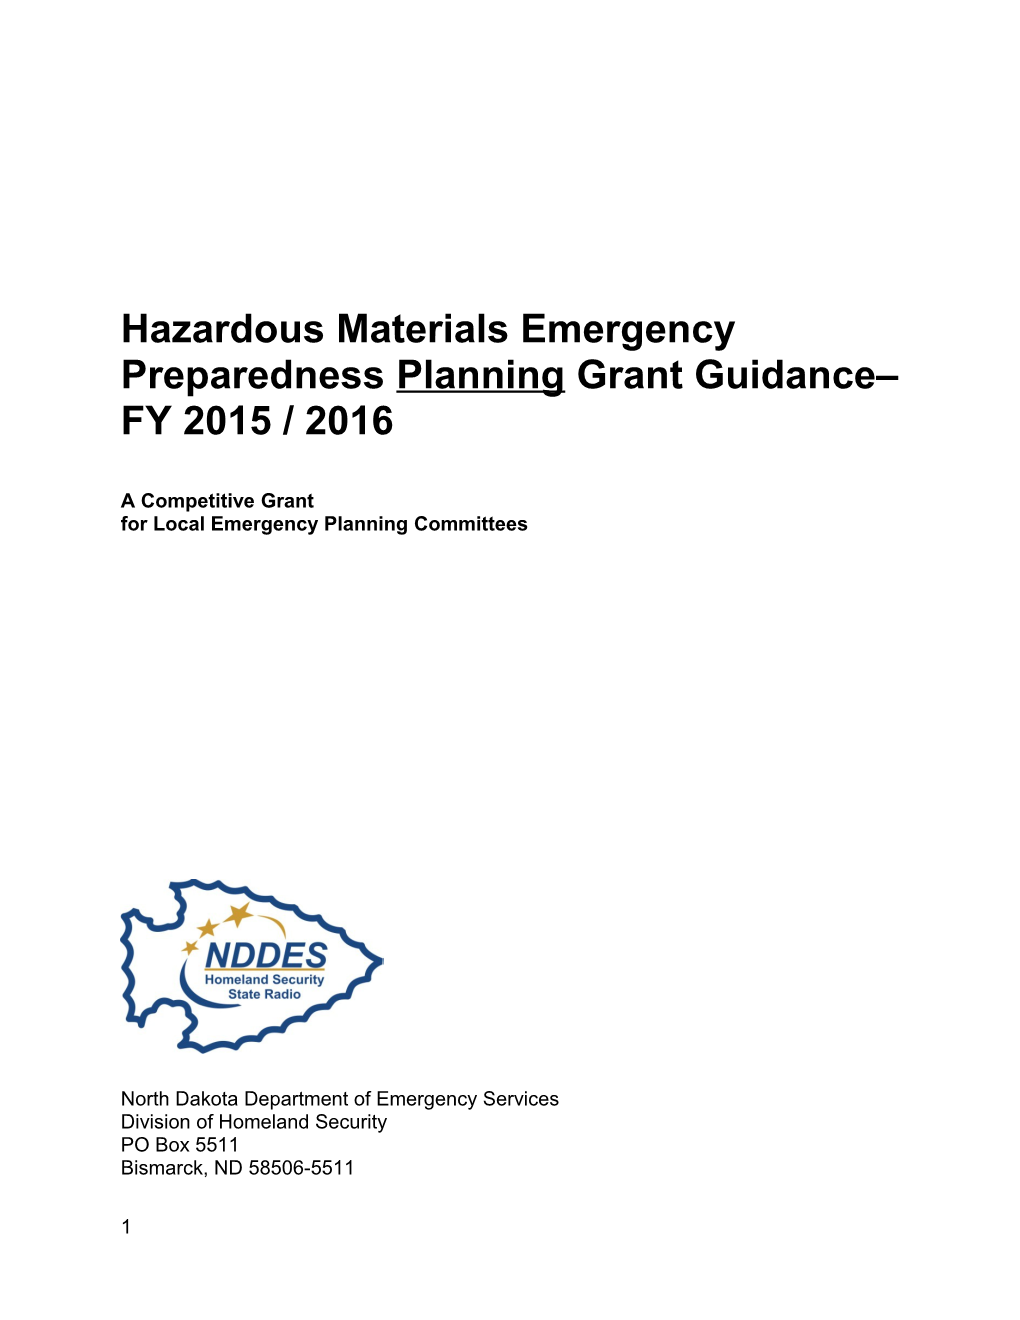 Hazardous Materials Emergency Preparedness Grant Program s1